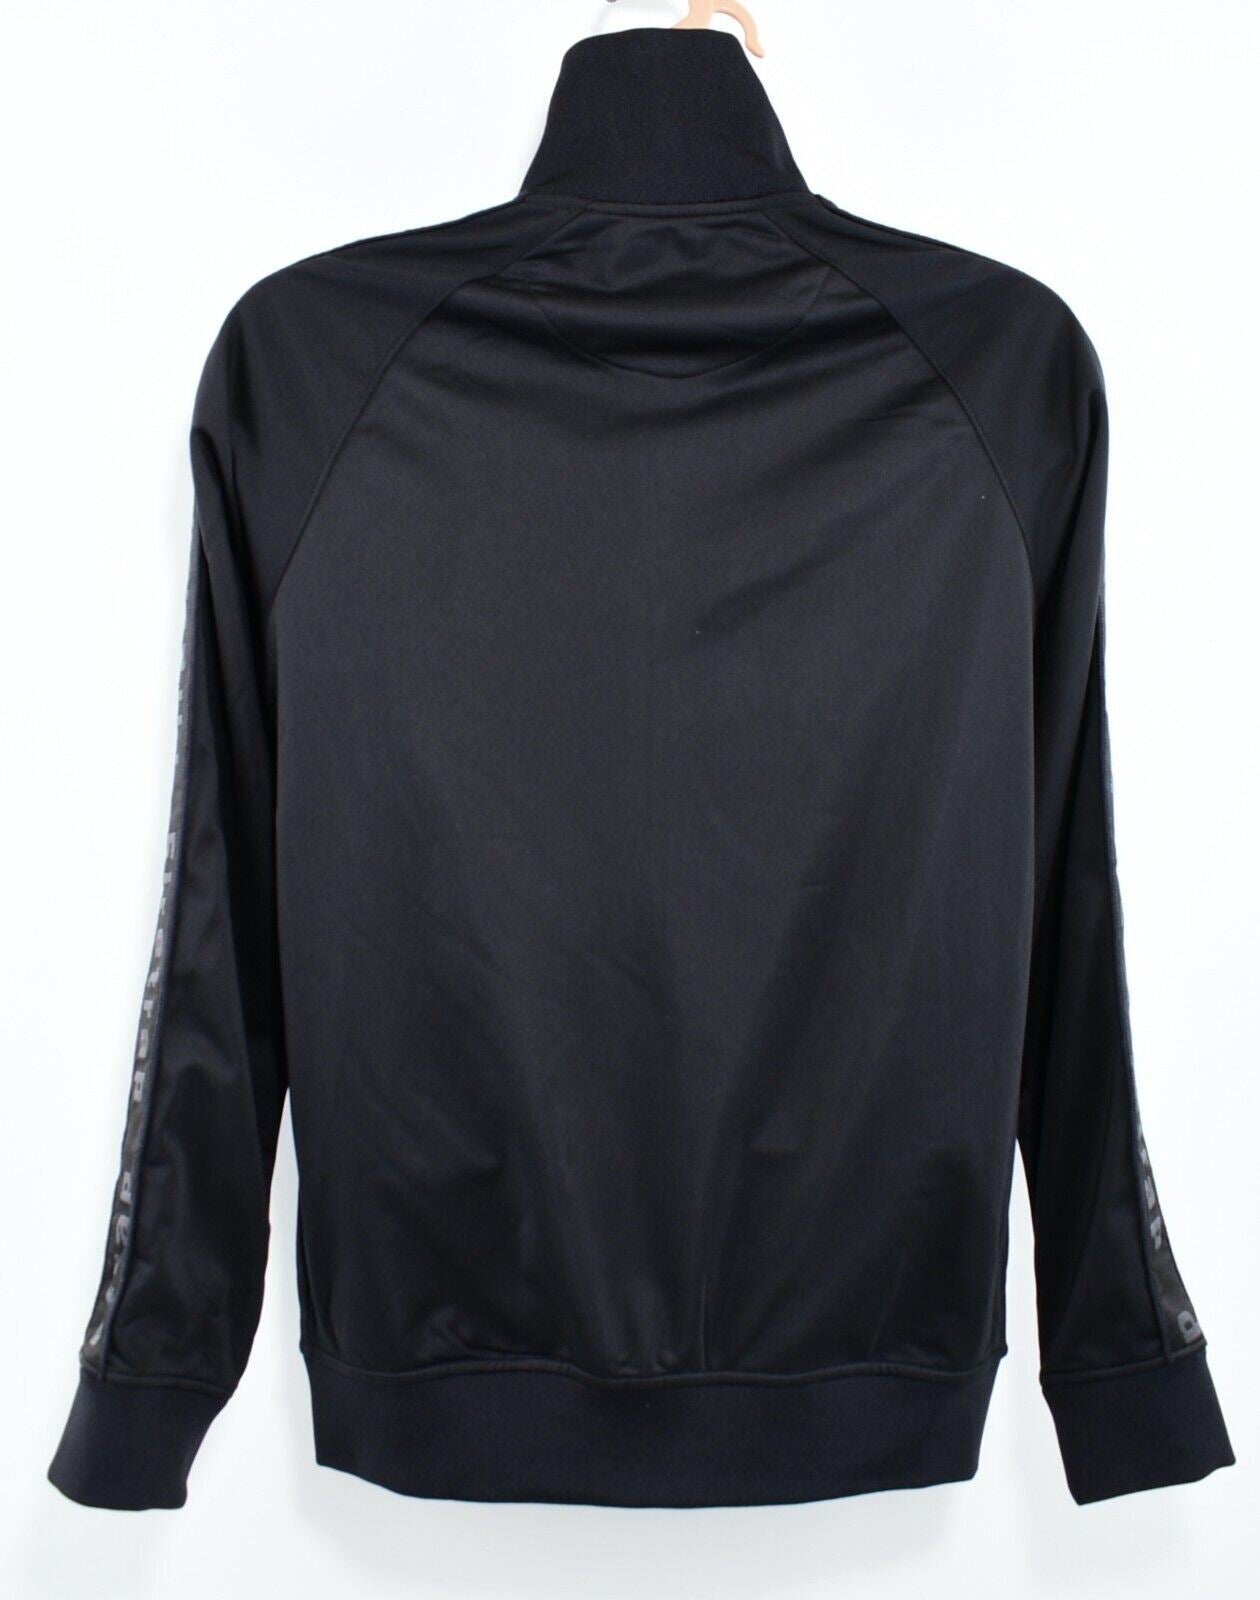 FIRETRAP Men's Full Zip Track Jacket, Track Suit Top,  Black, size LARGE